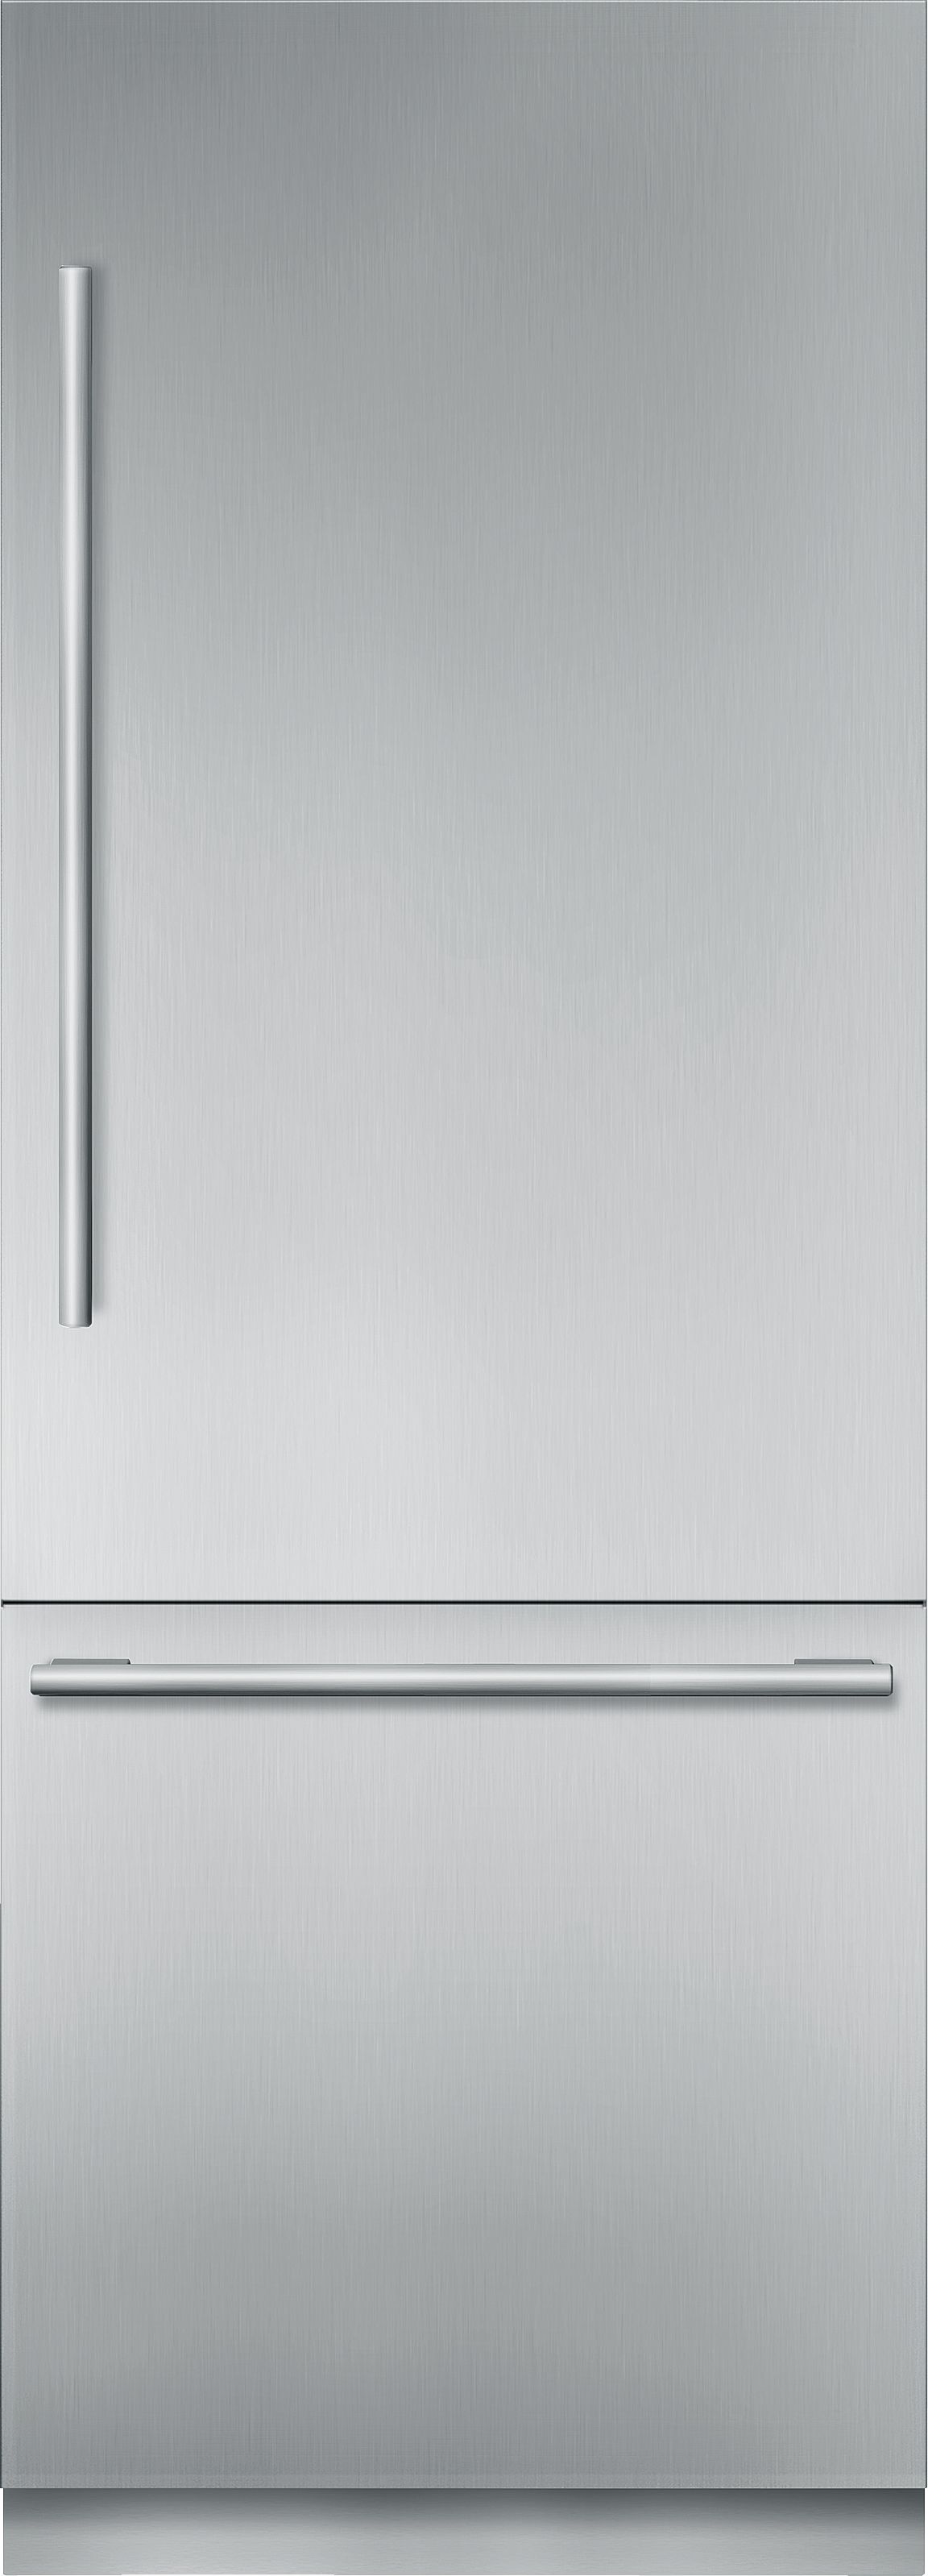 single panel 30 inch refrigerator